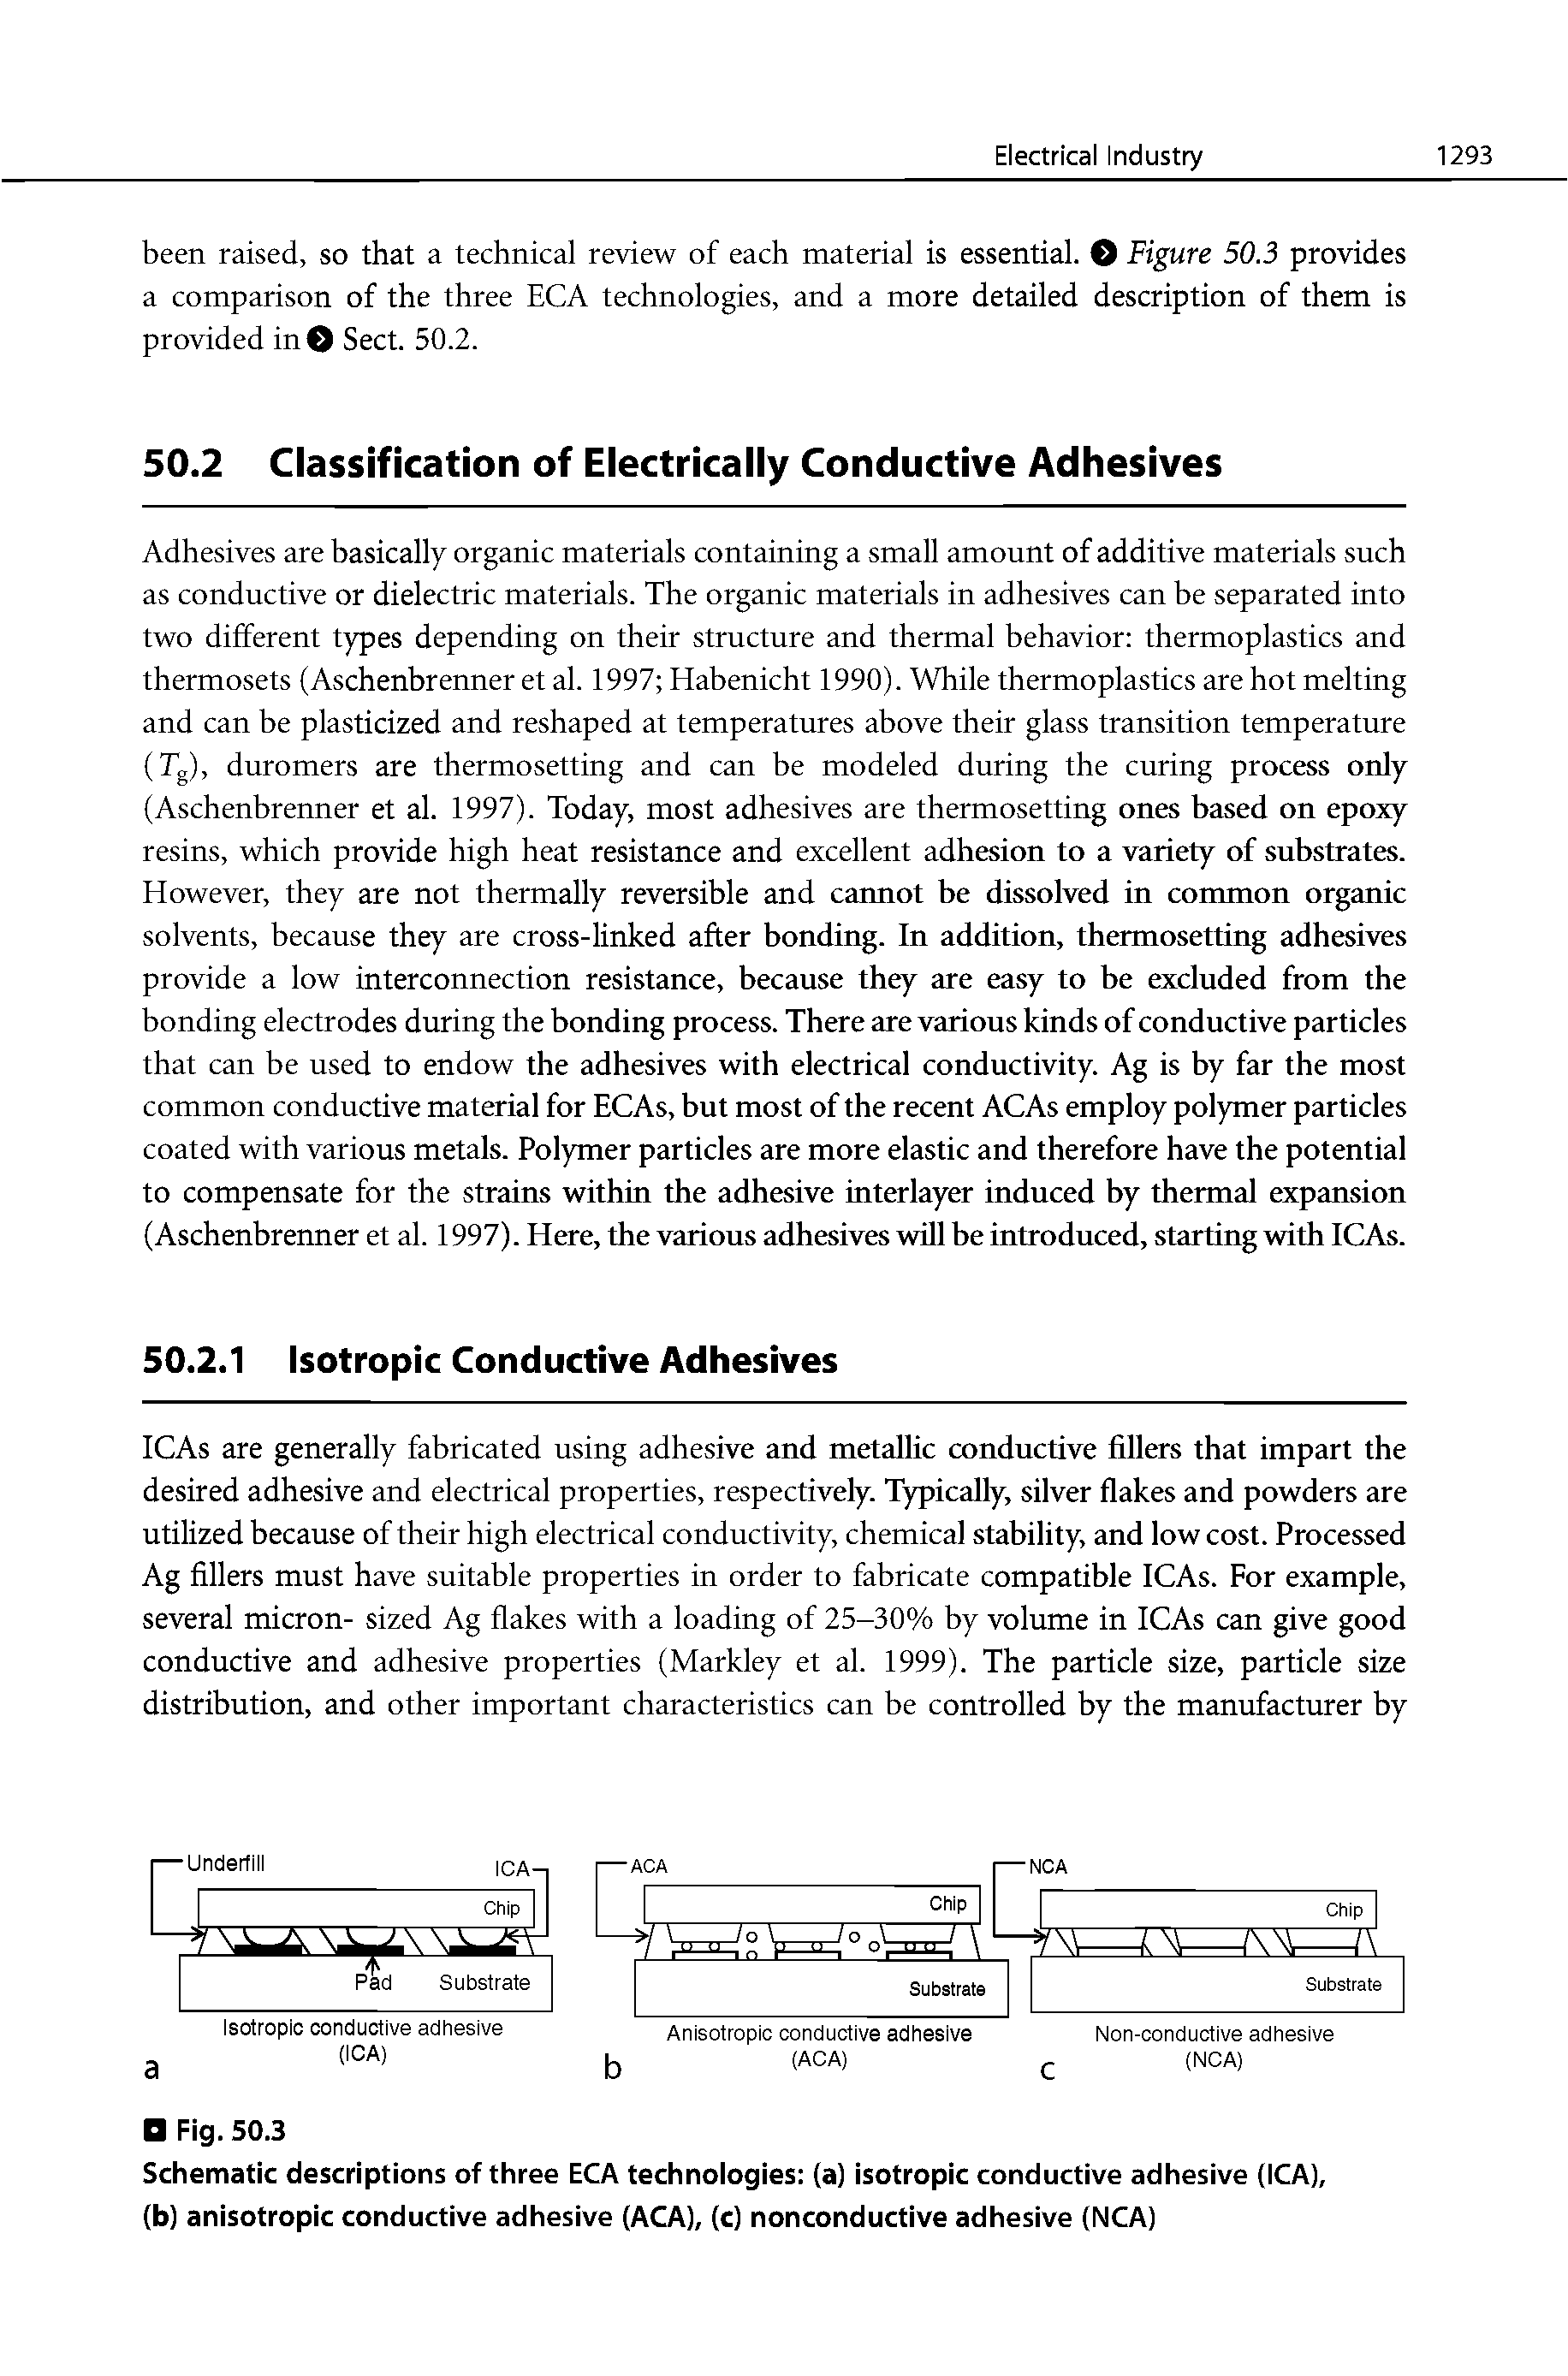 Schematic descriptions of three ECA technoiogies (a) isotropic conductive adhesive (ICA), (b) anisotropic conductive adhesive (ACA), (c) nonconductive adhesive (NCA)...